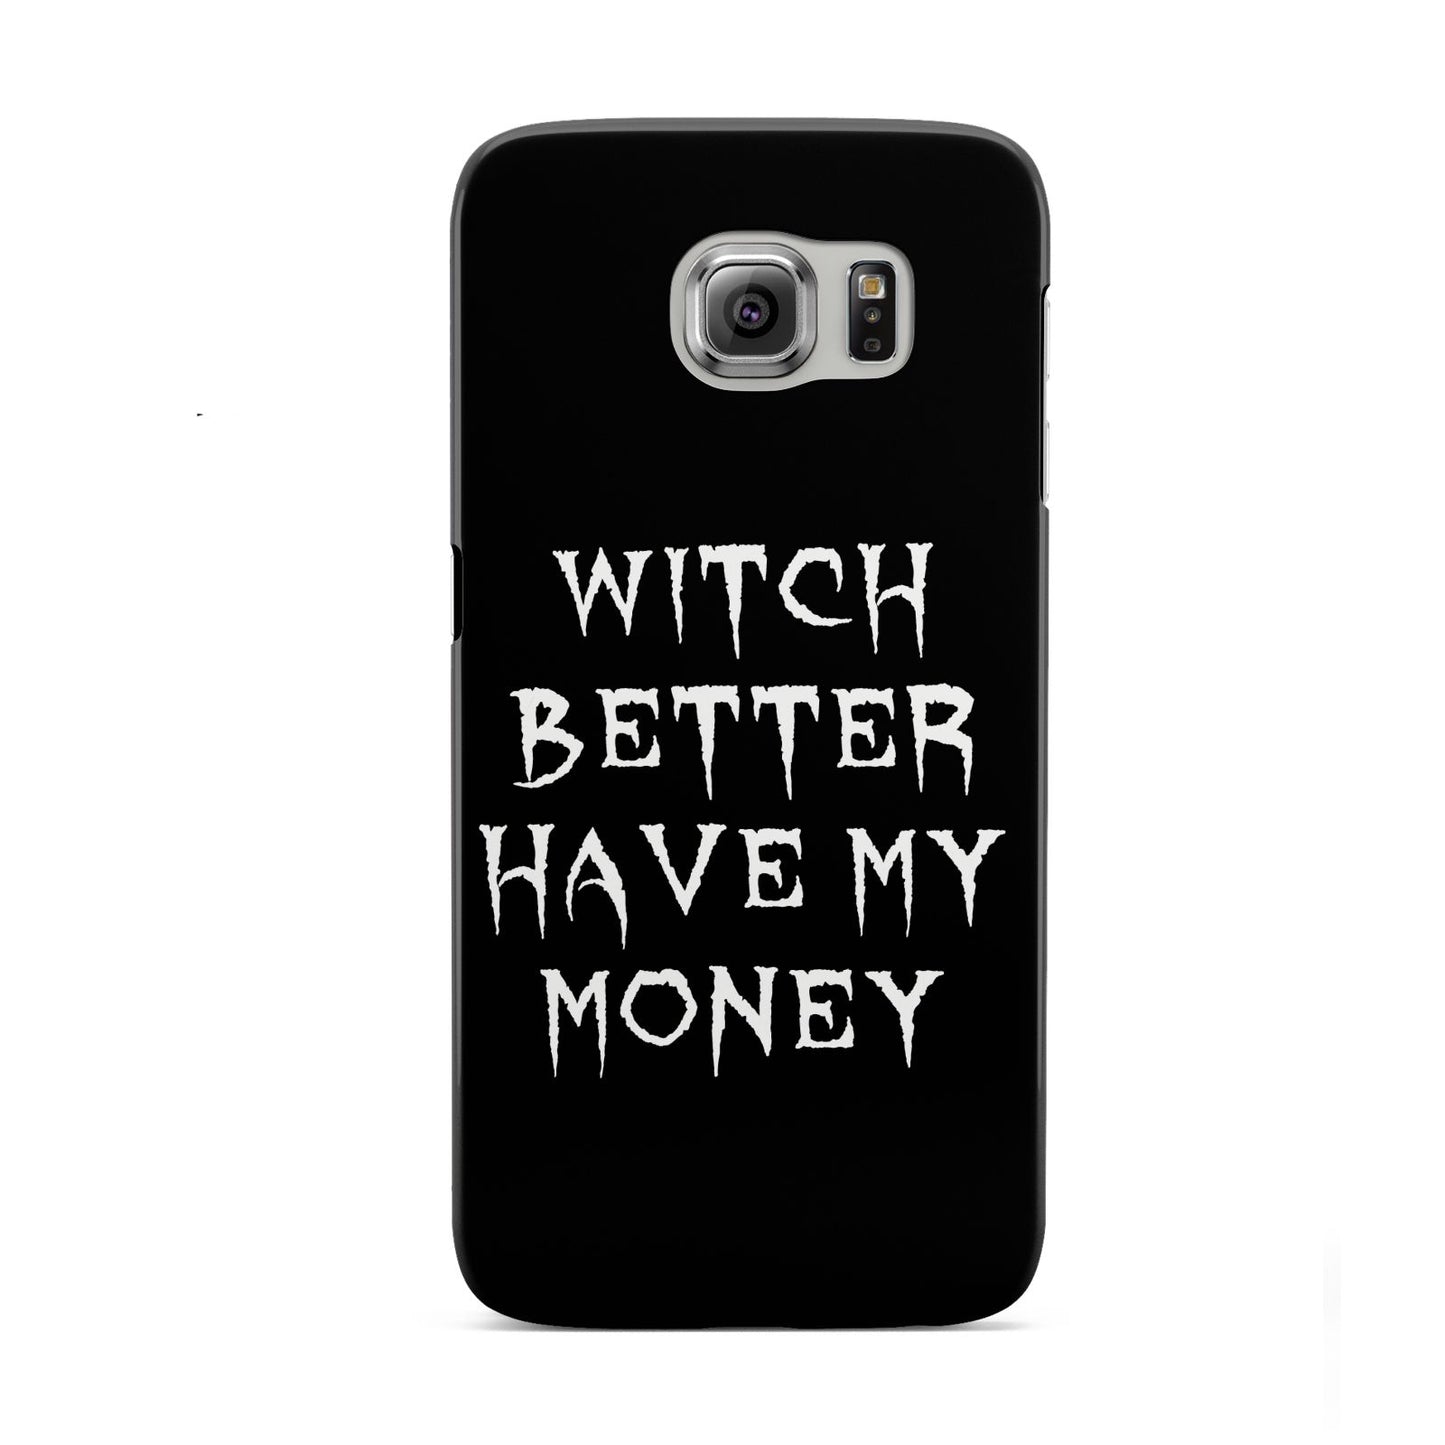 Witch Better Have My Money Samsung Galaxy S6 Case